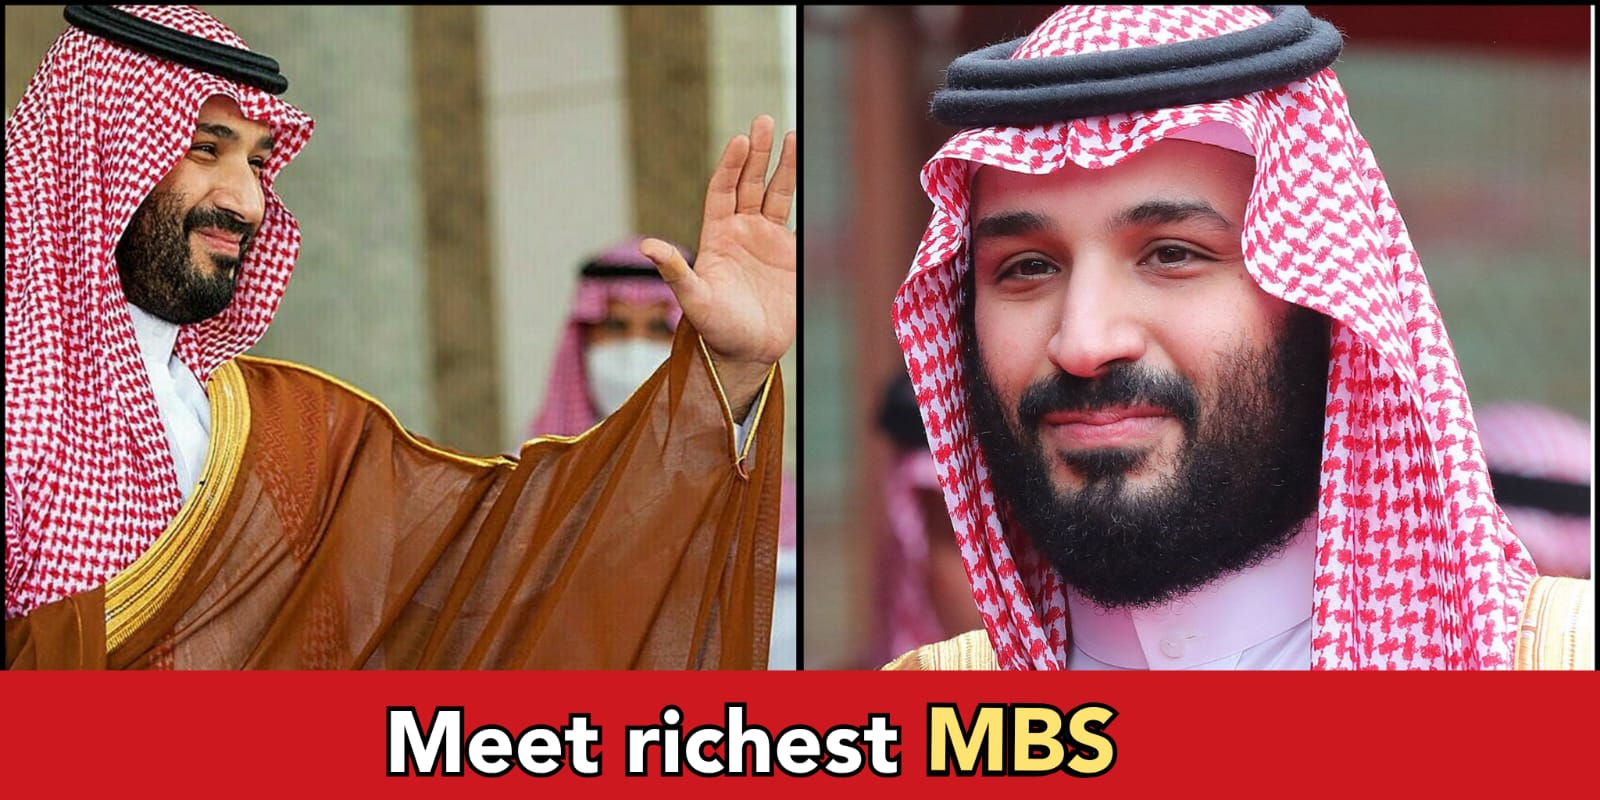 How much money does Saudi Arabia's Prince Mohammed bin Salman Al Saud